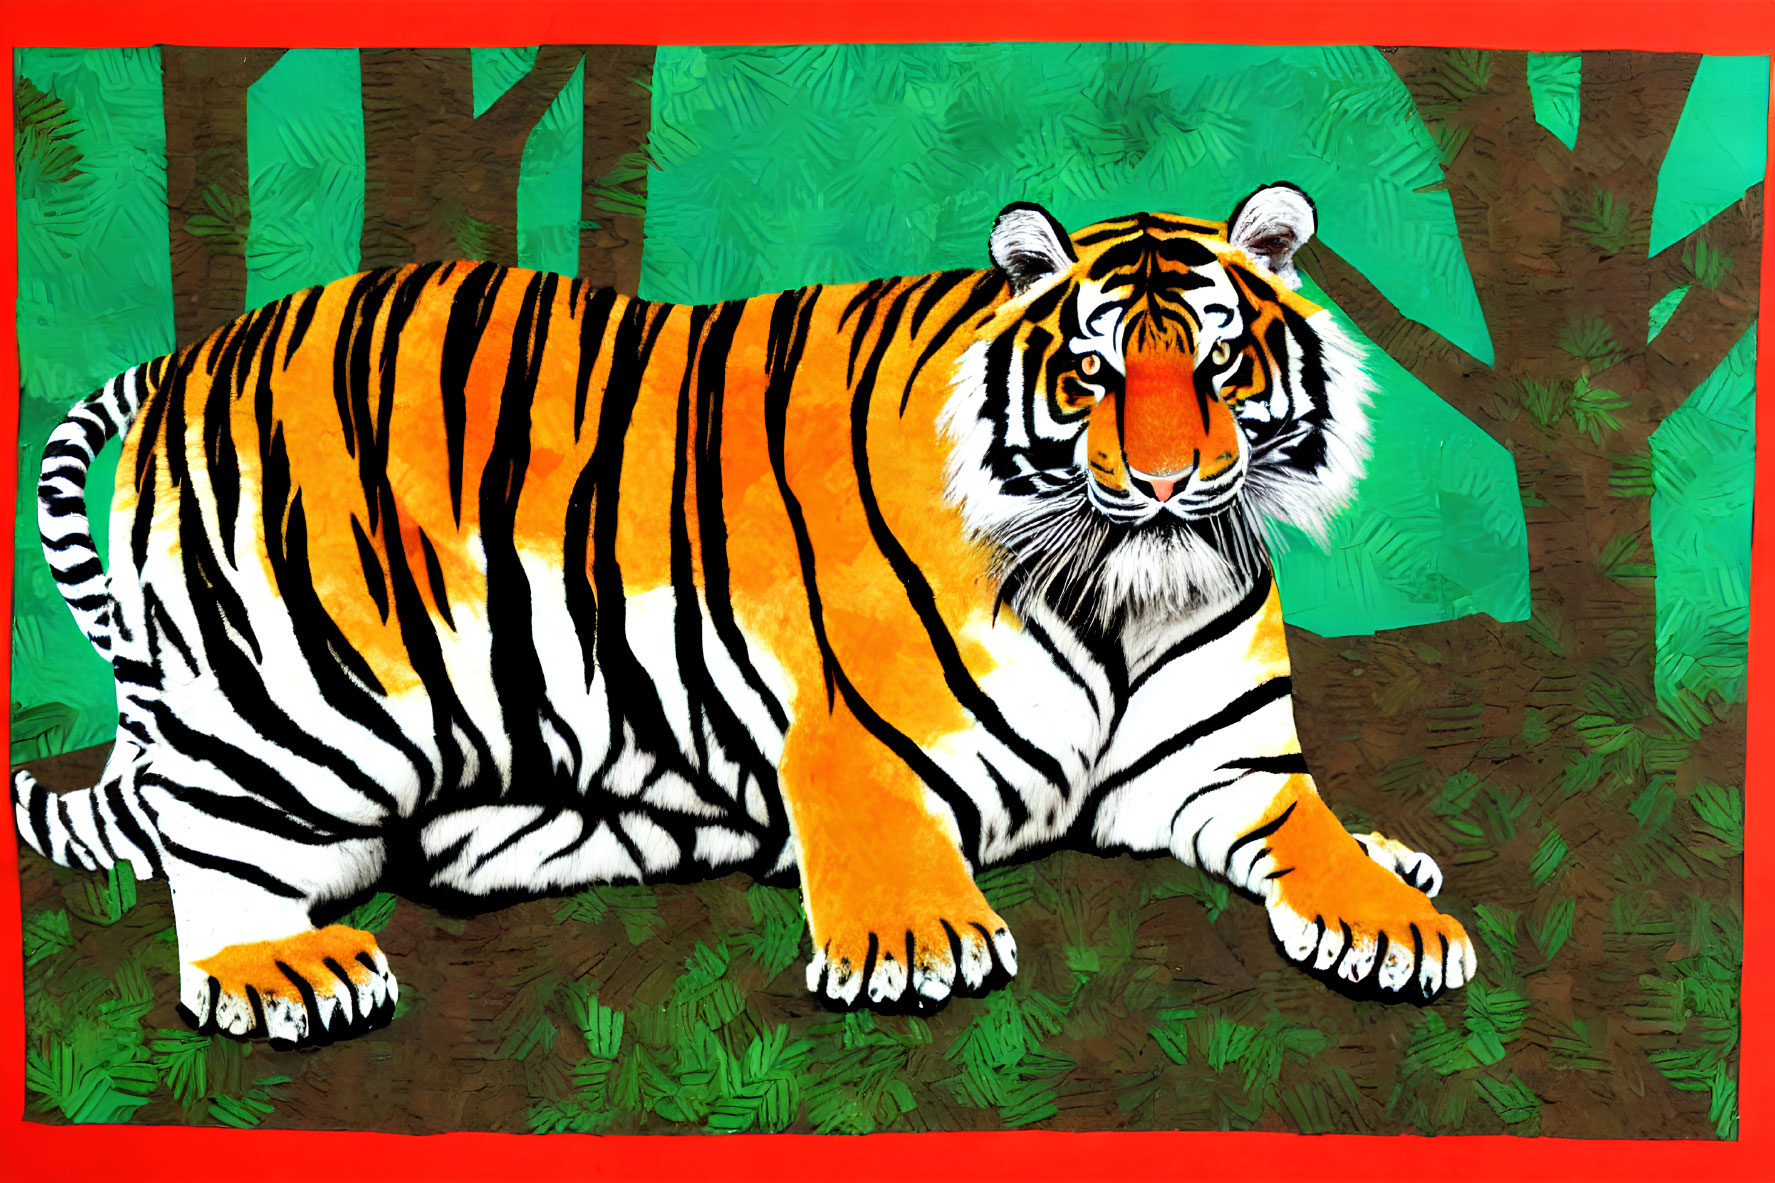 Colorful Tiger Illustration in Vibrant Jungle Setting